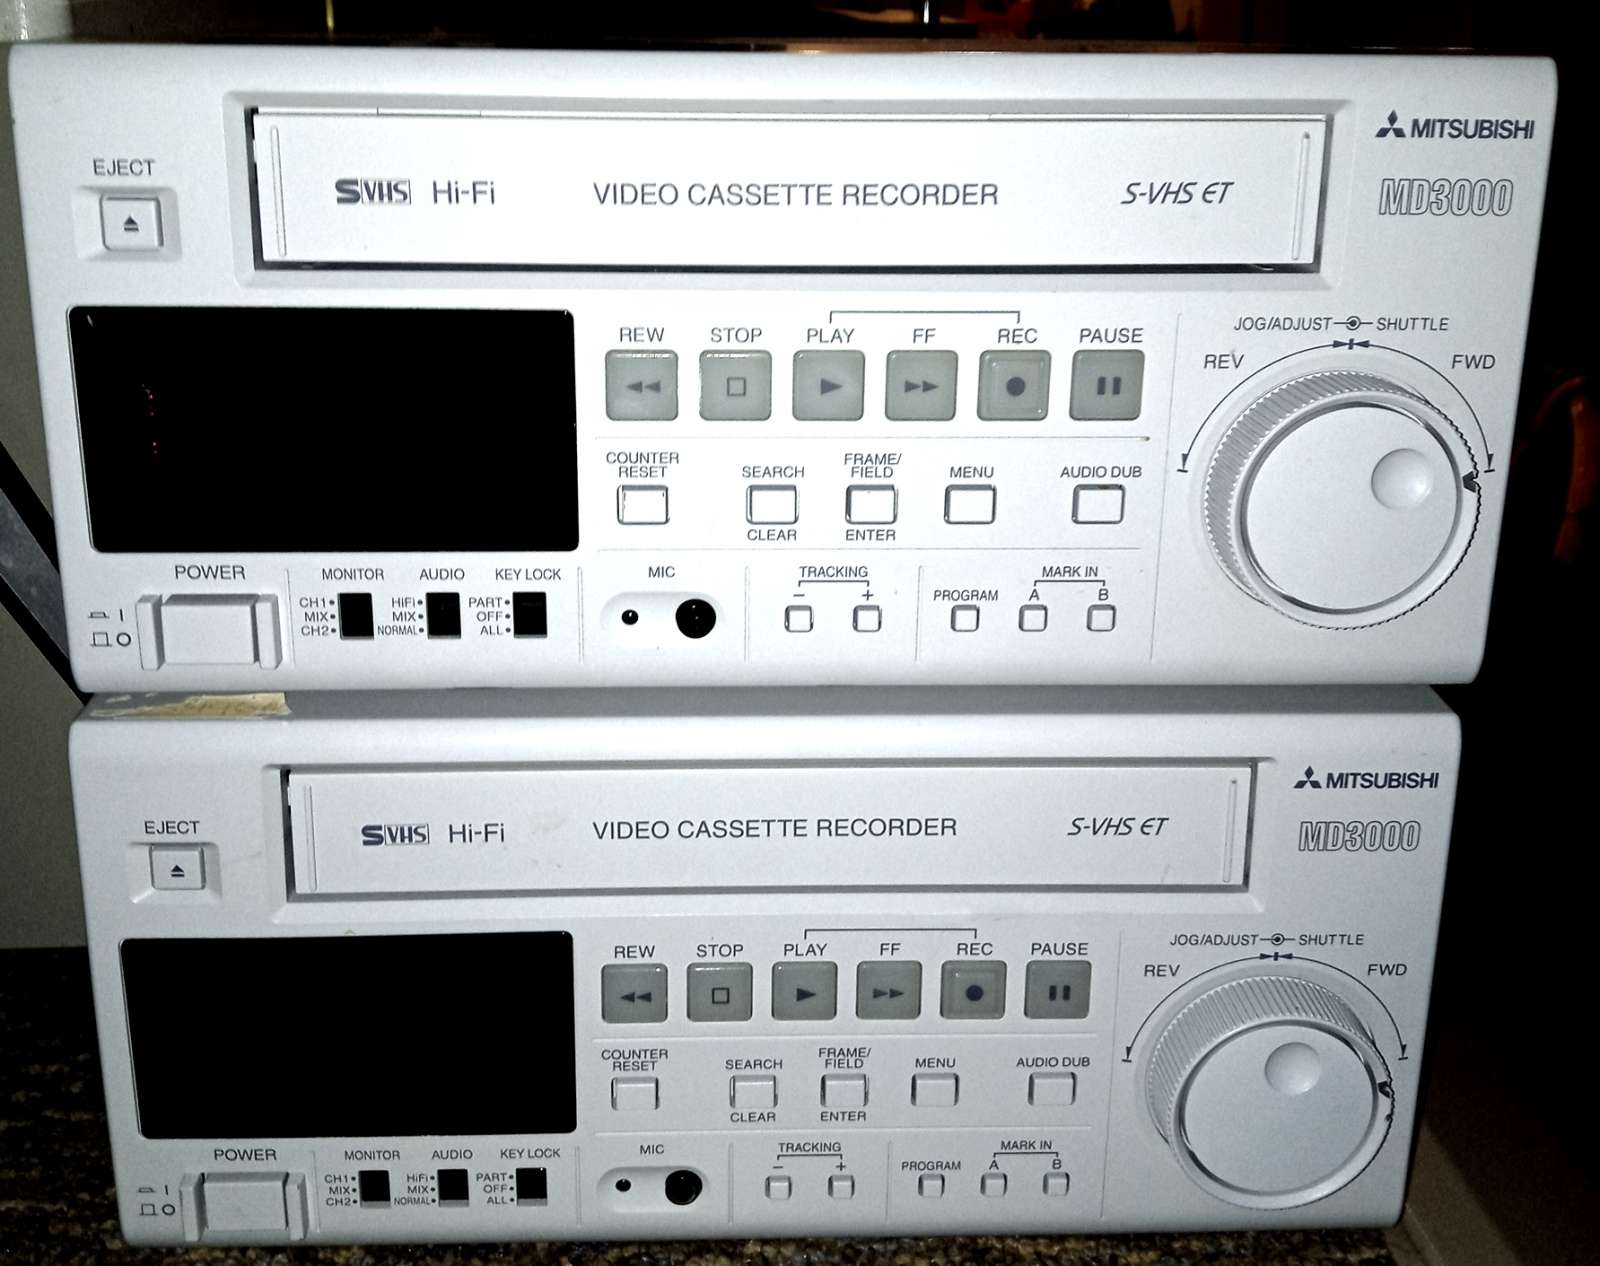 Mitsubishi MD3000 S-Video Recorder